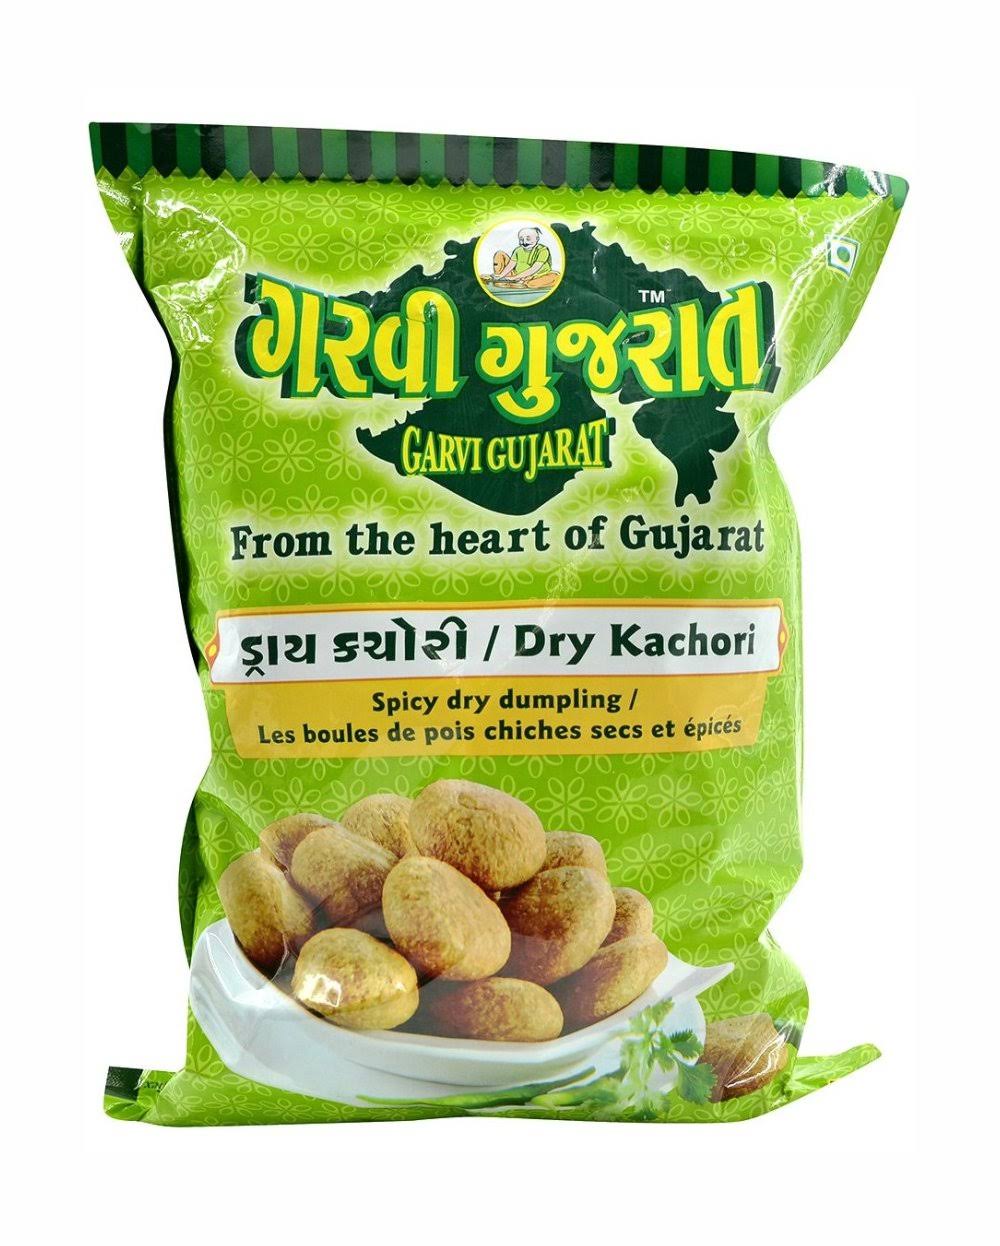 Garvi Gujarat Dry Kachori 2 lbs